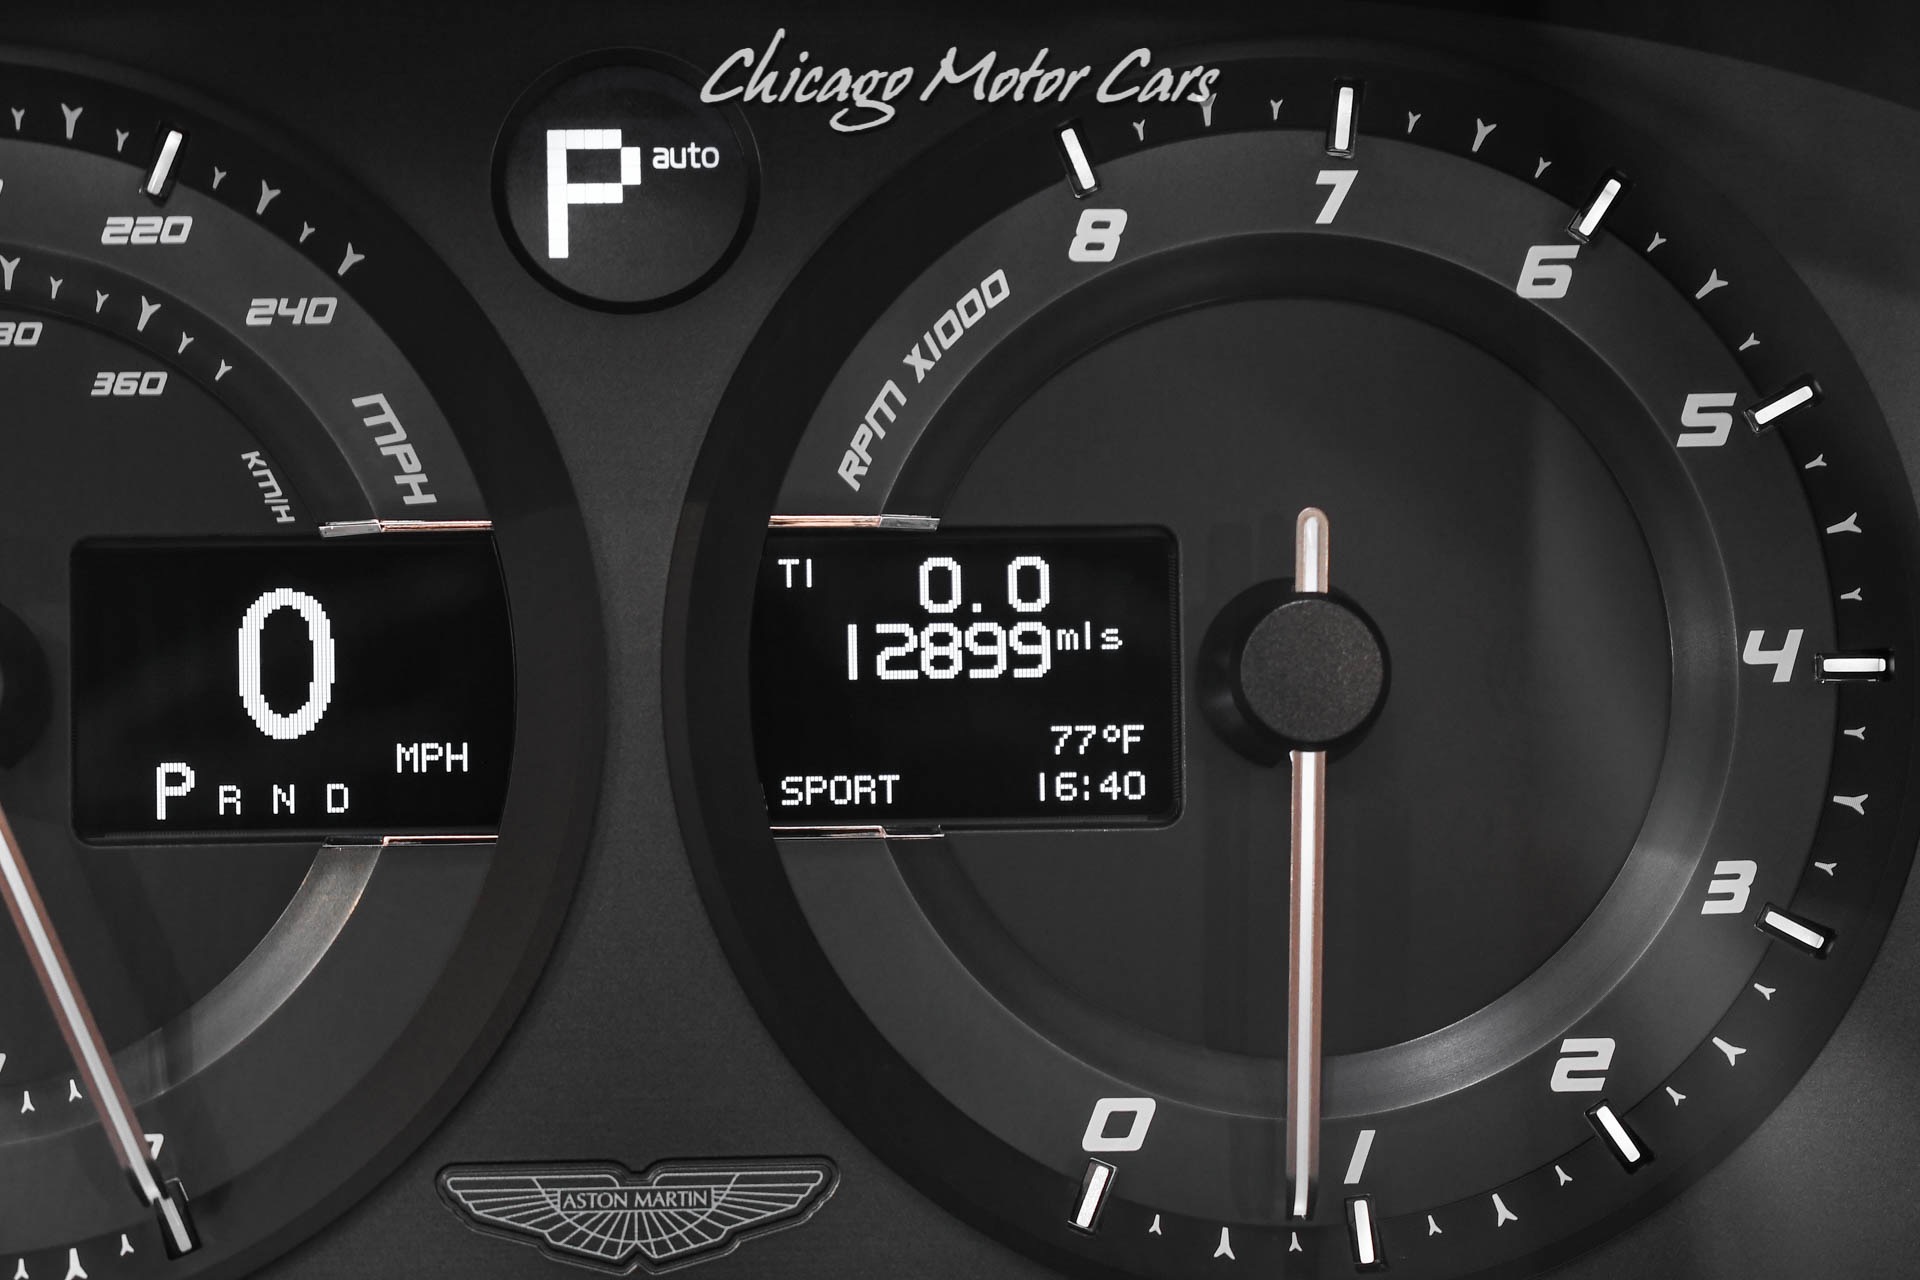 Used-2016-Aston-Martin-DB9-GT-Volante-10-Spoke-Gloss-Black-Wheels-Excellent-Condition-60L-V12